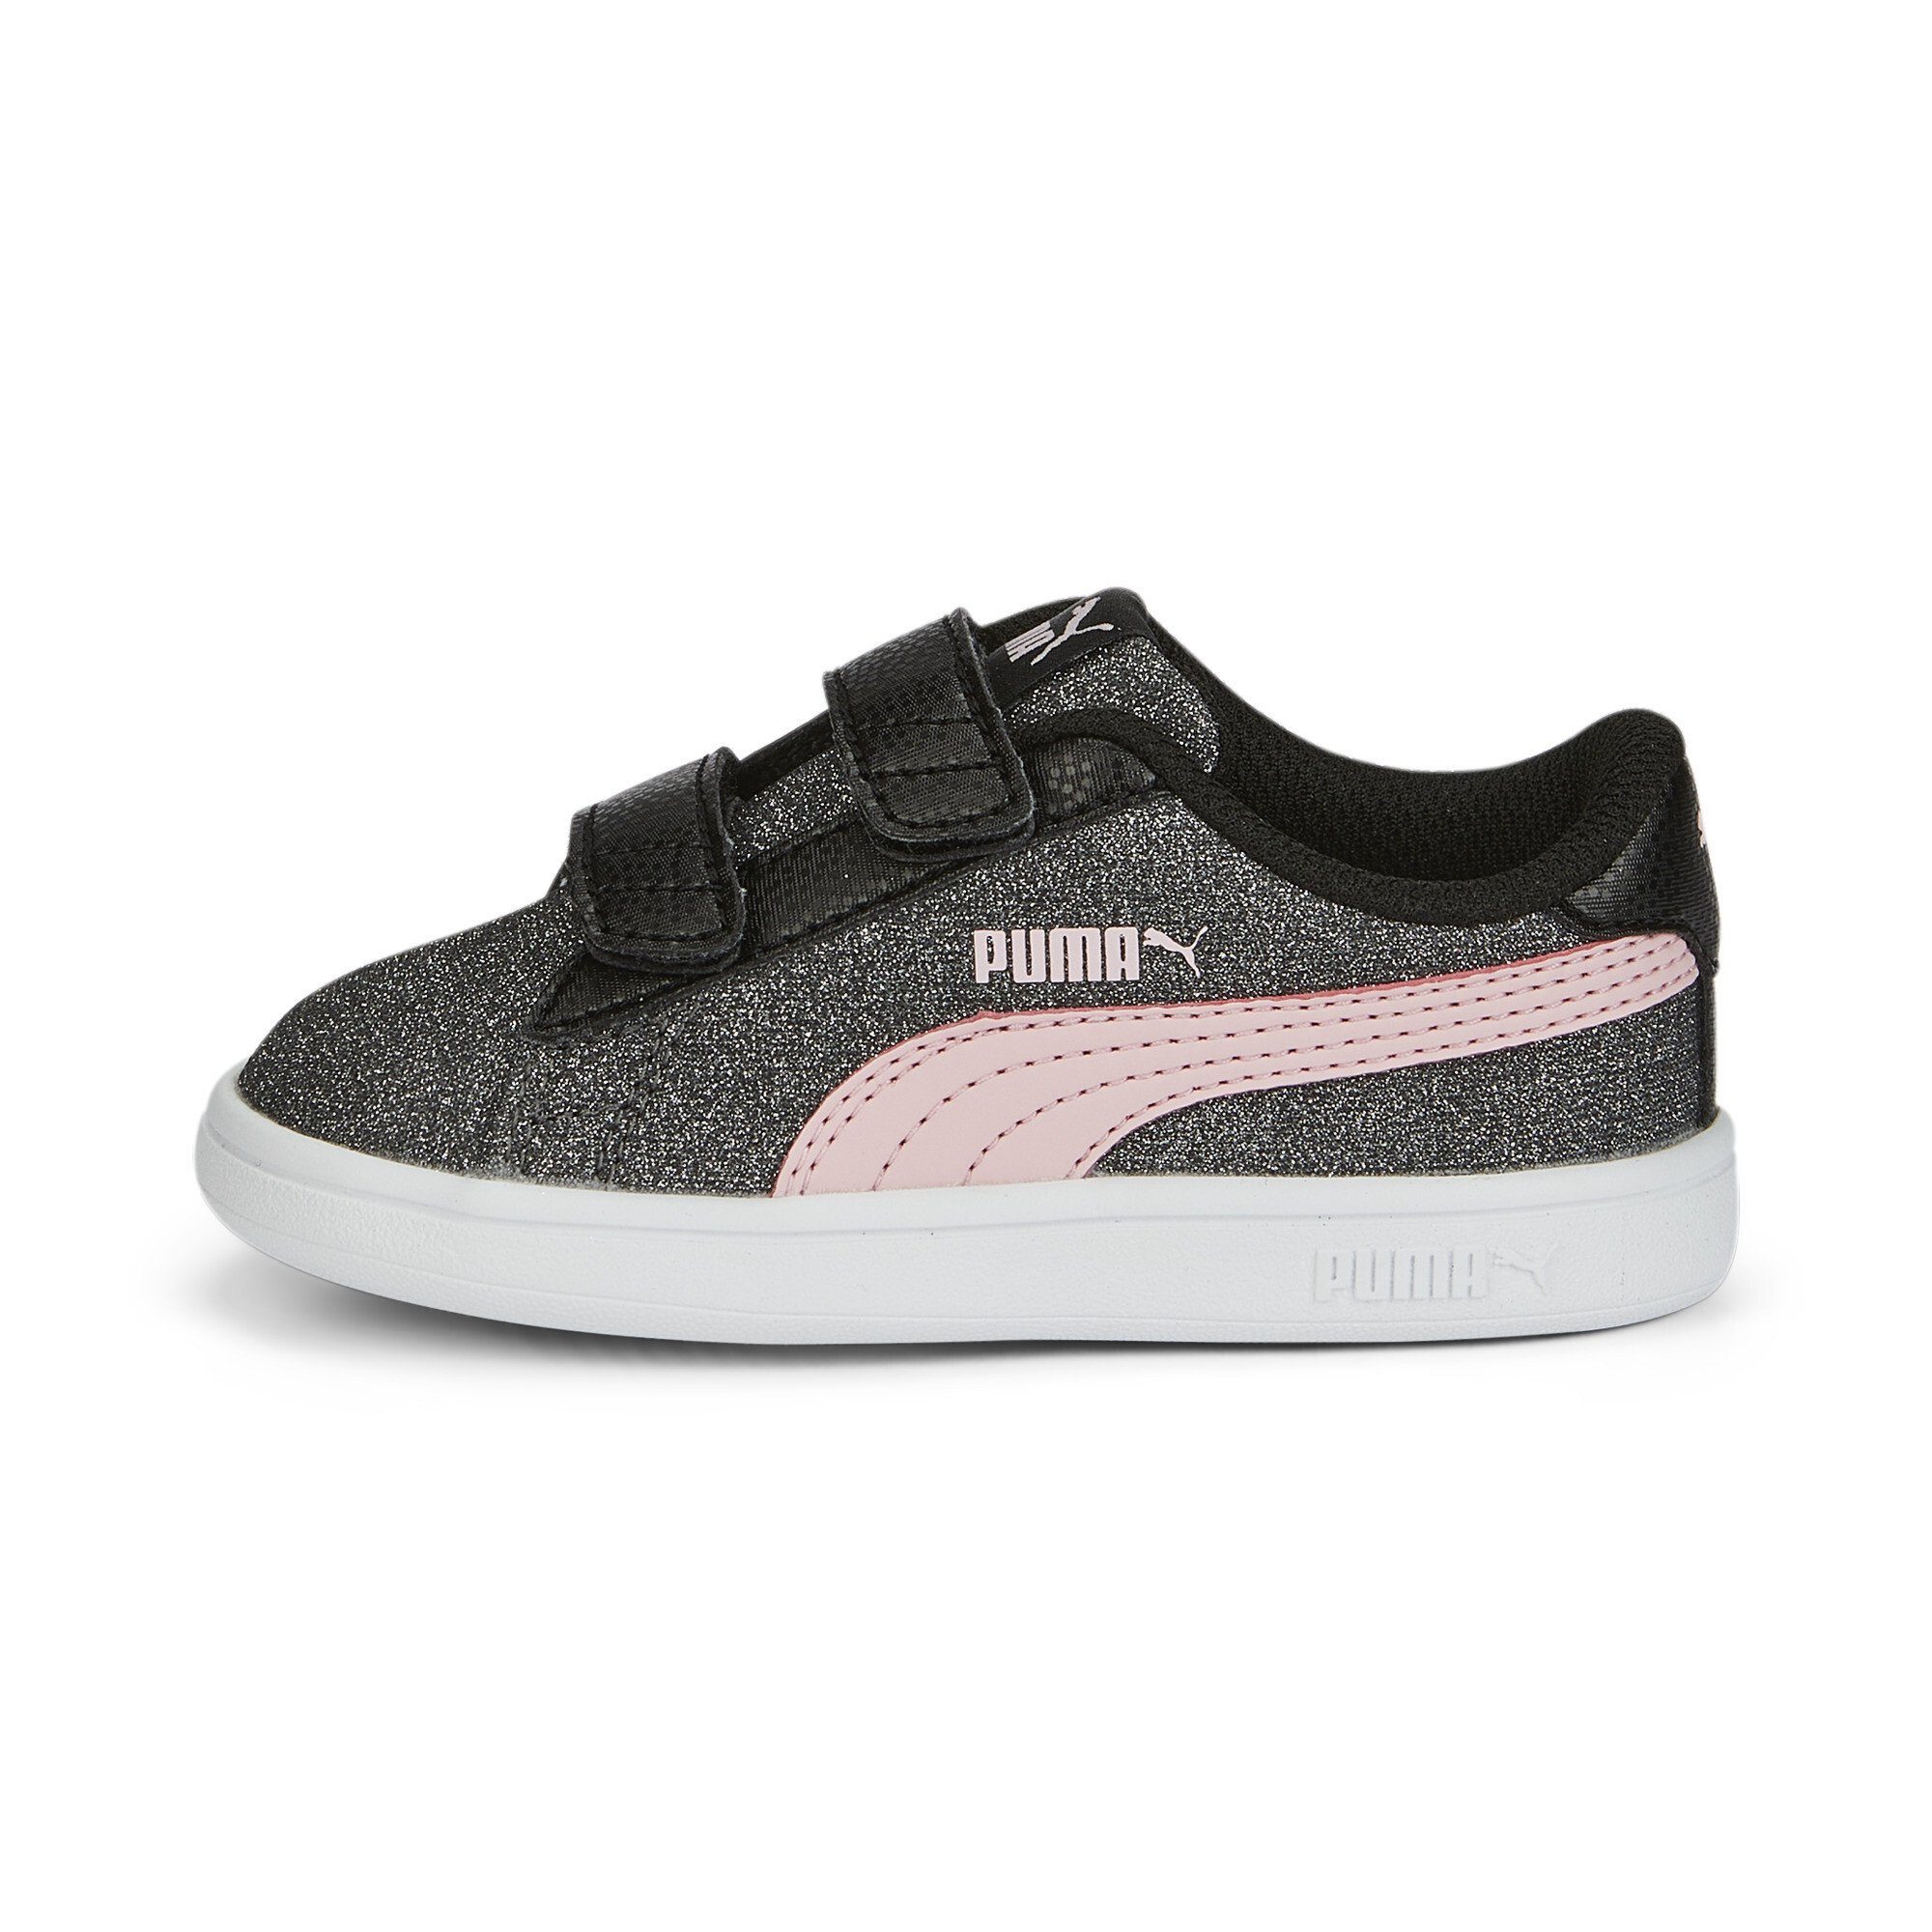 PUMA PUMA Smash v2 Glitzer Babies Mädchen Sneaker Sneaker